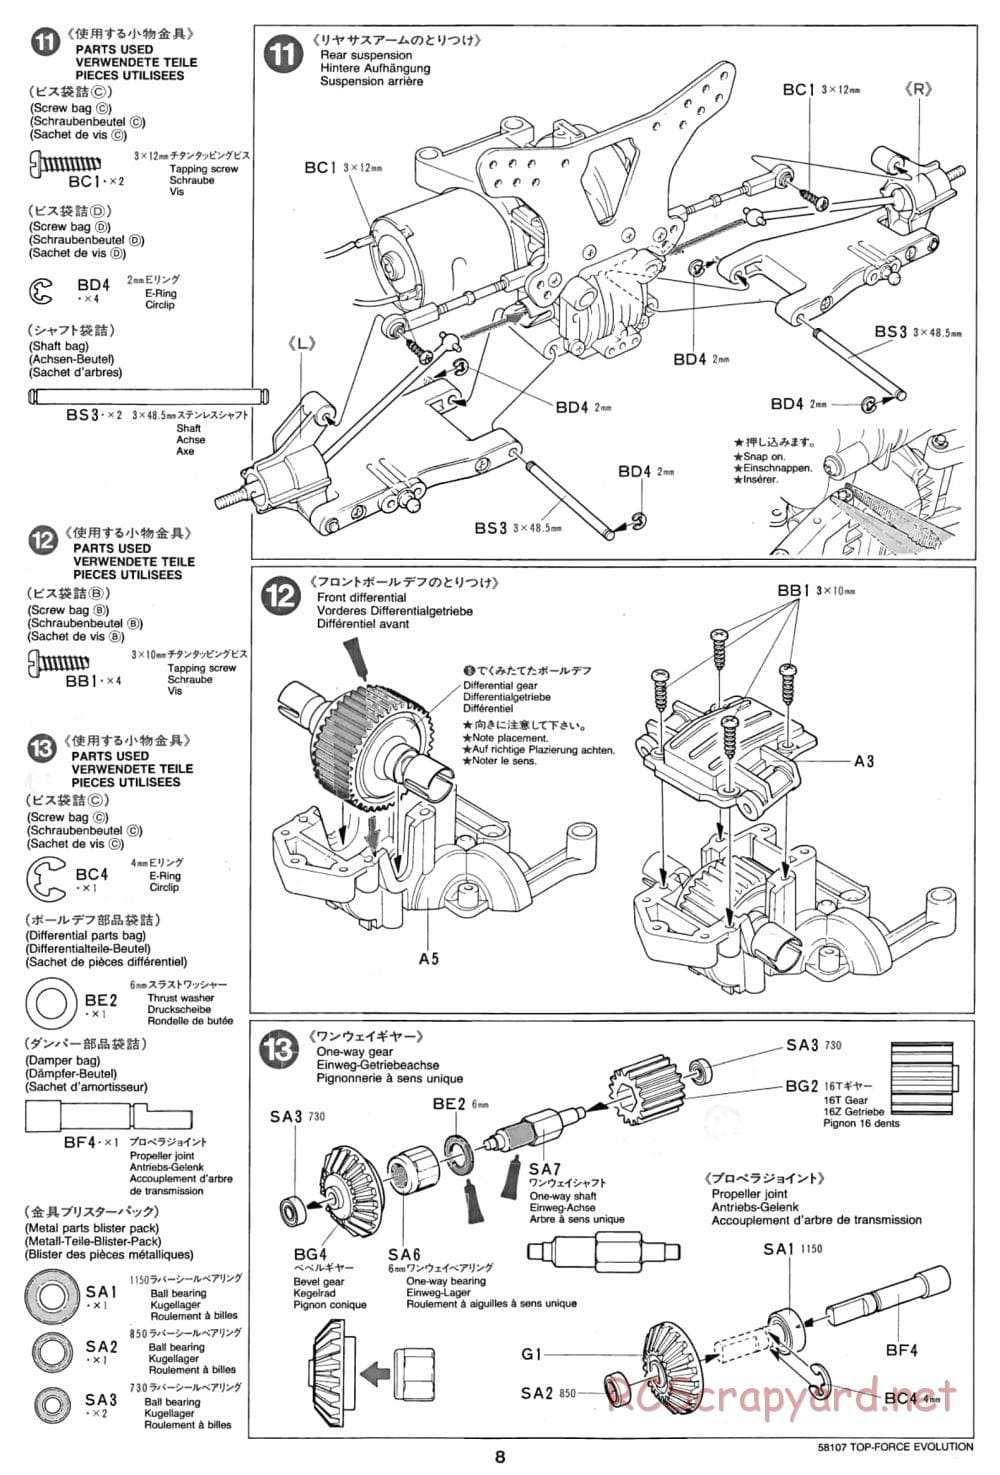 Tamiya - Top Force Evolution Chassis - Manual - Page 8